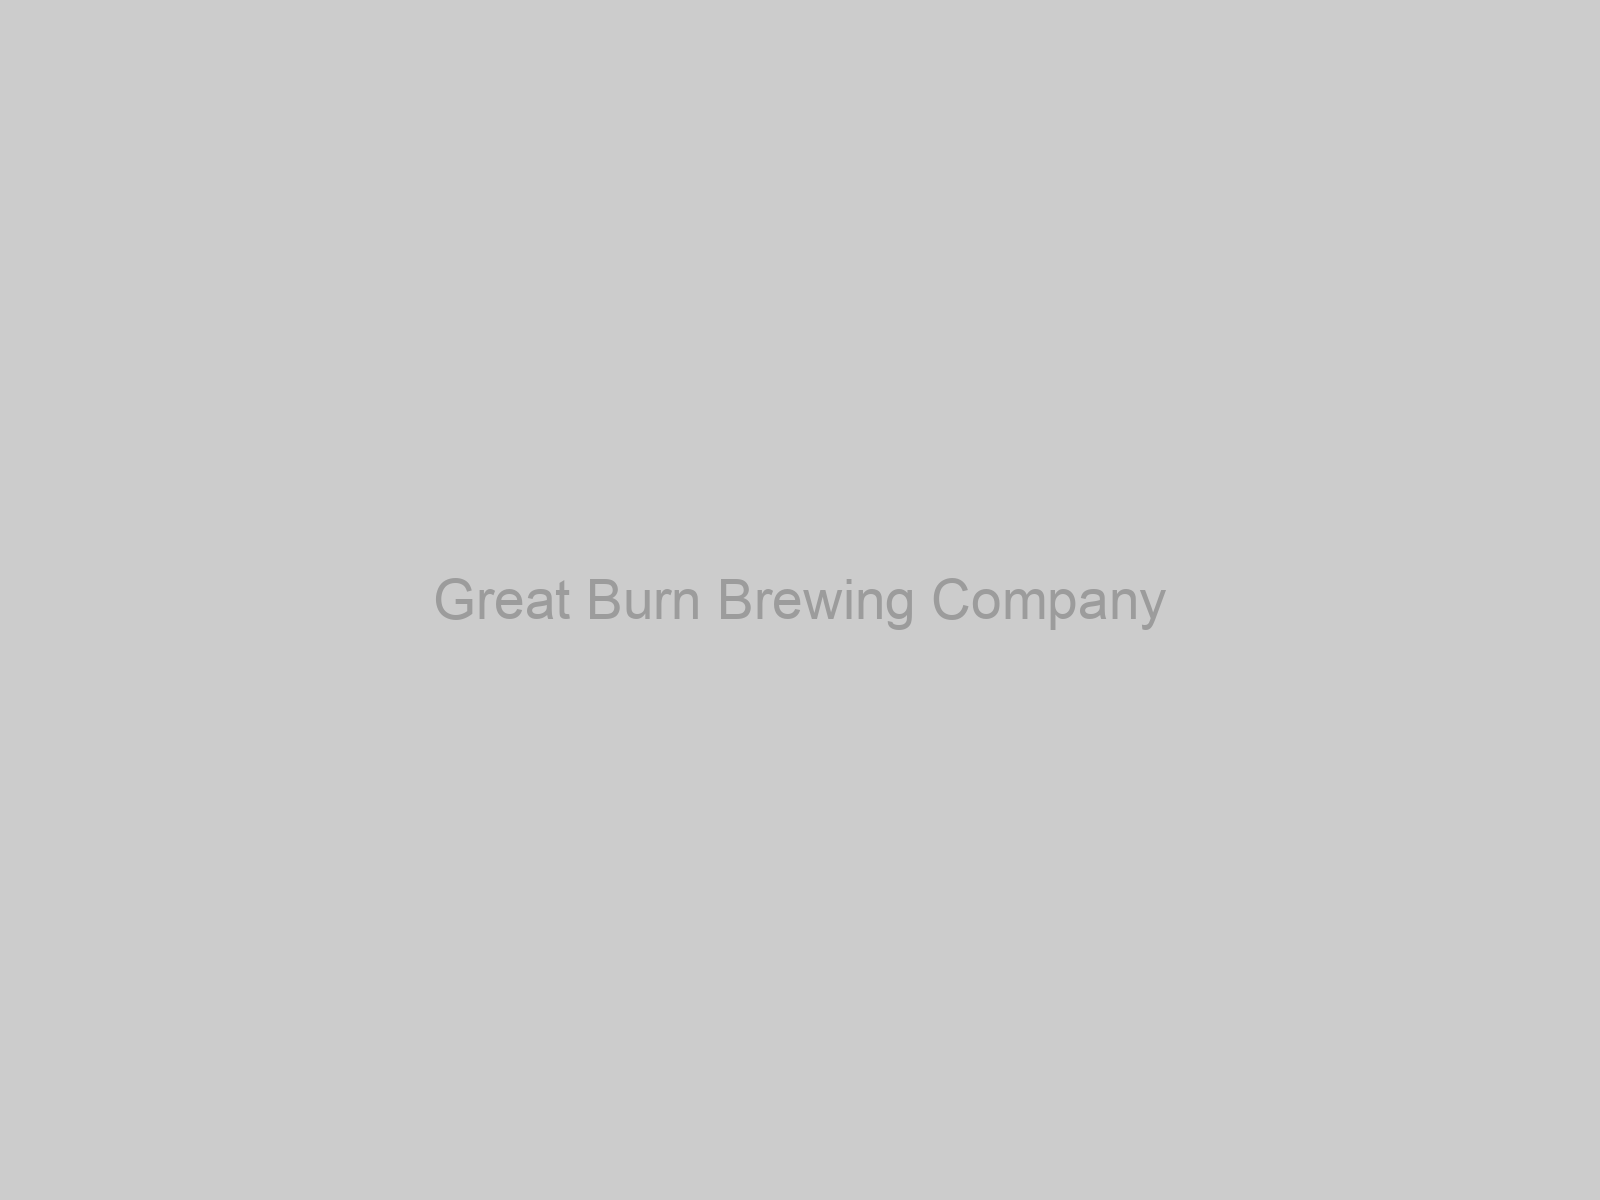 Great Burn Brewing Company